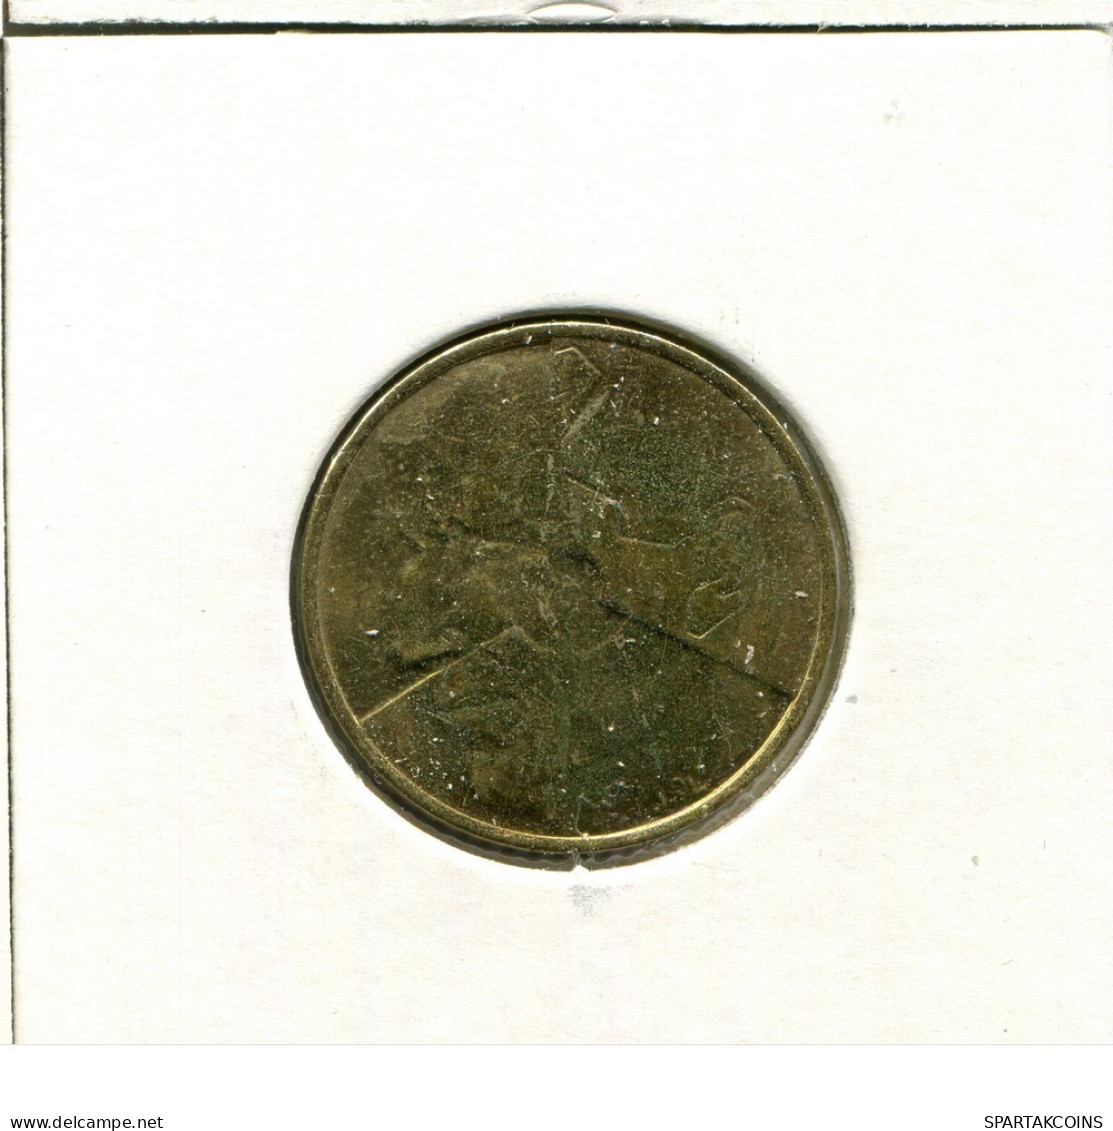 5 FRANCS 1988 Französisch Text BELGIEN BELGIUM Münze #AU096.D.A - 5 Frank